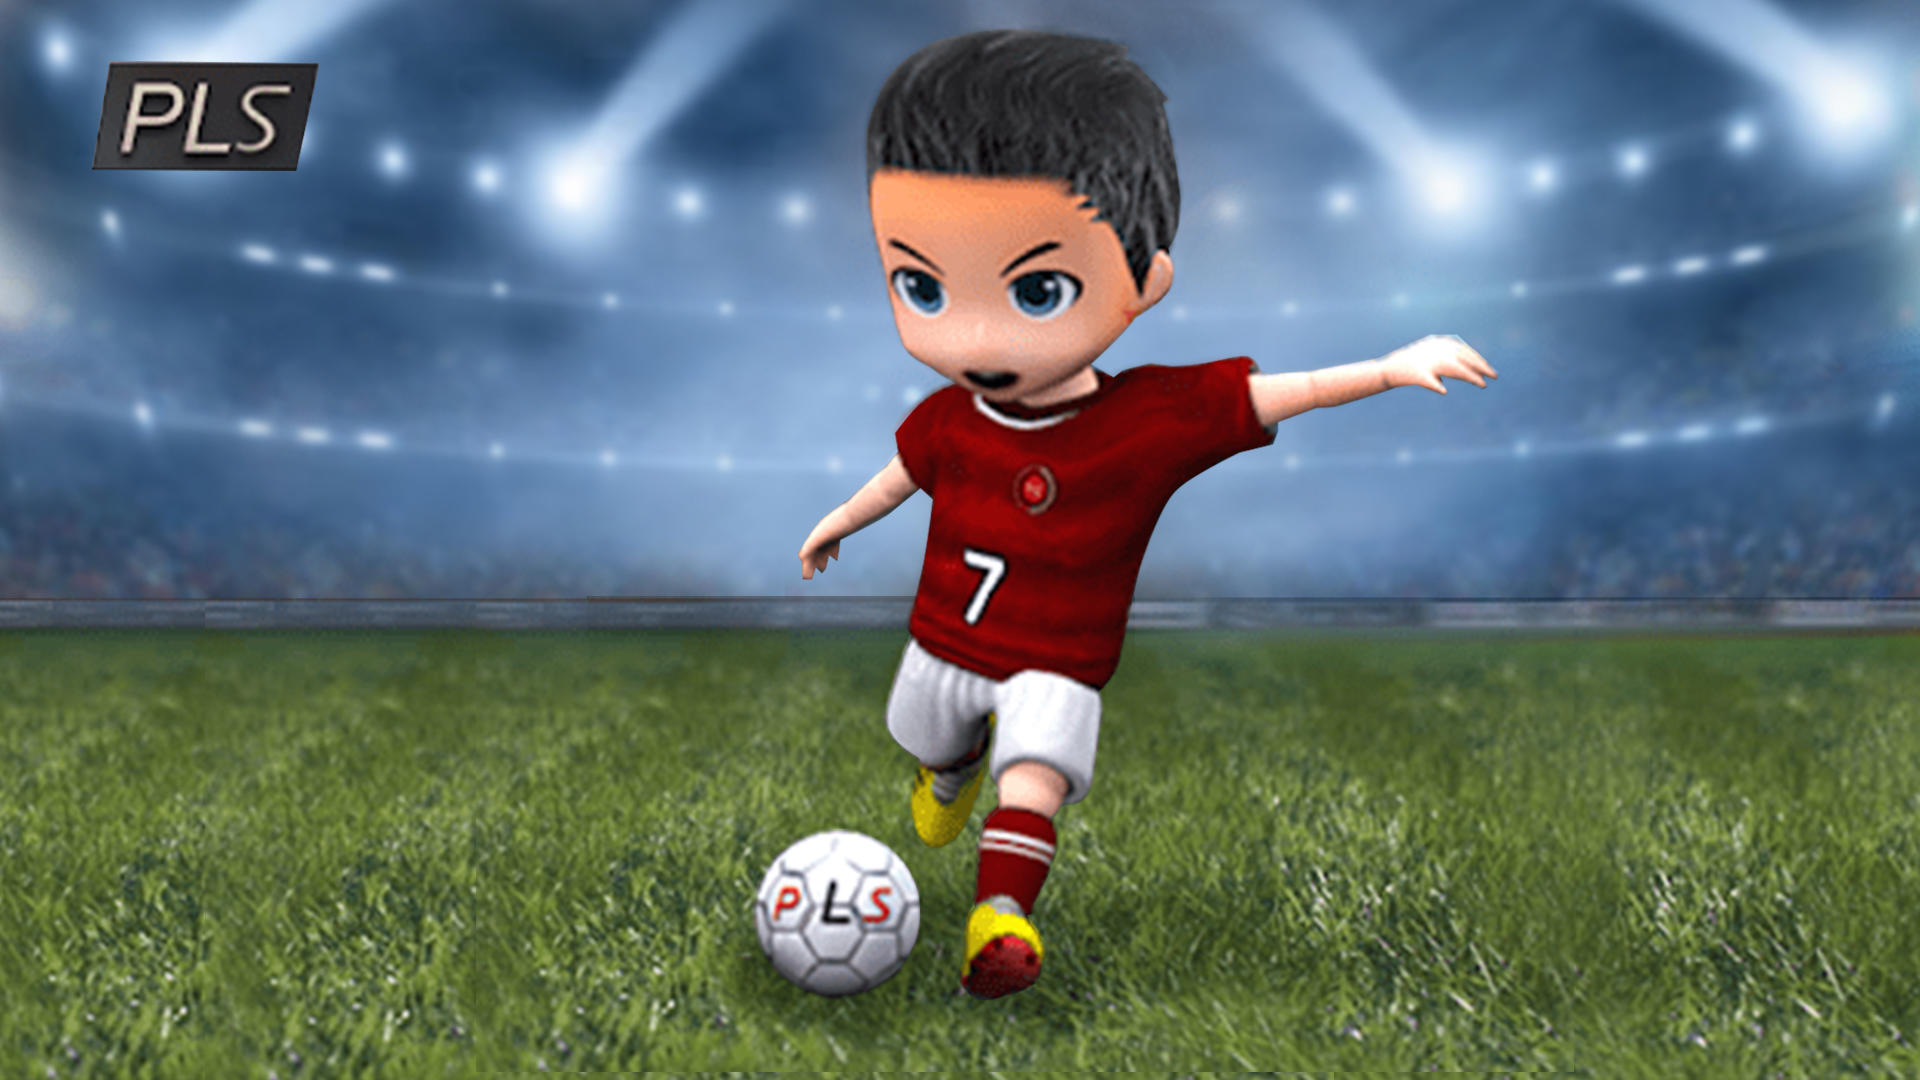 Pro League Soccer APK para Android - Download